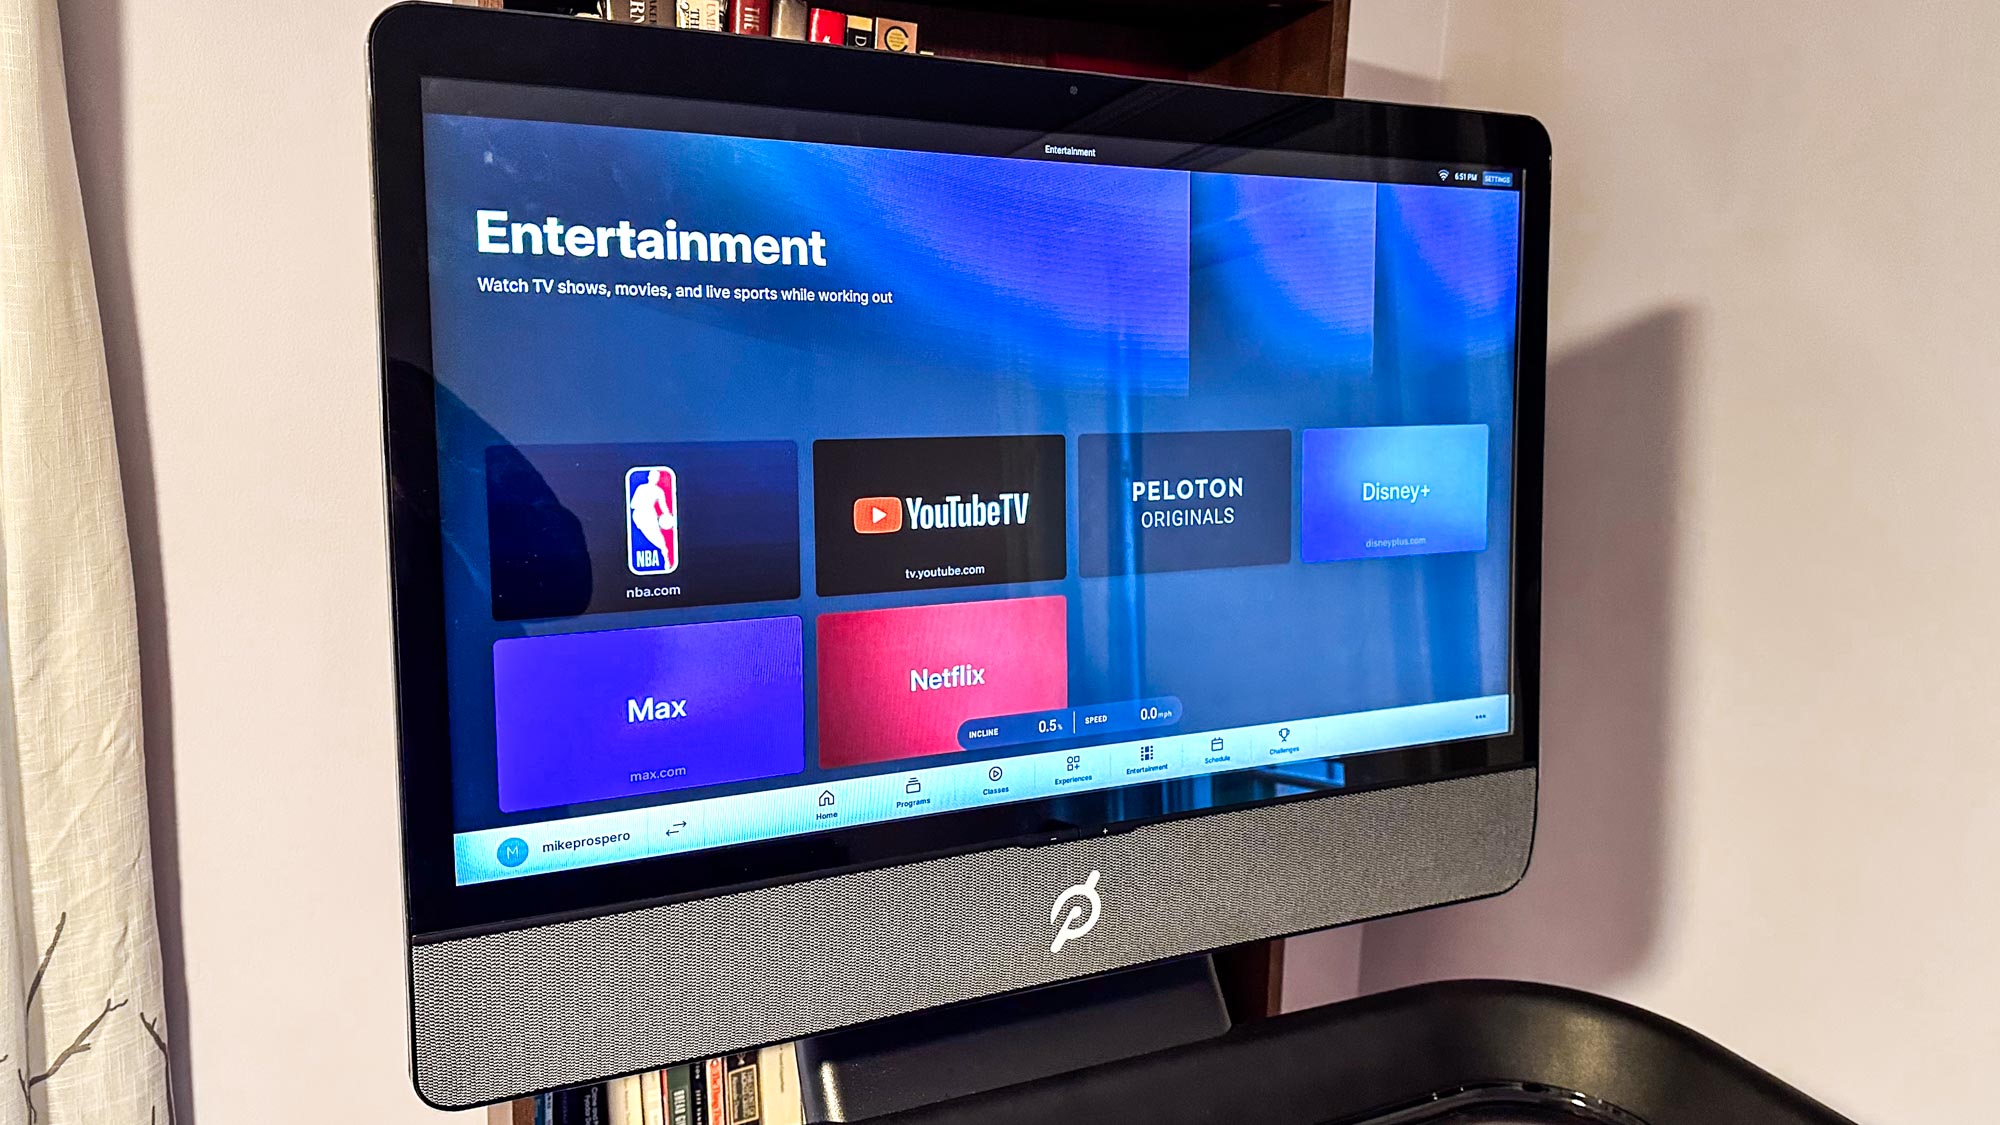 Peloton Tread+ display showing streaming options